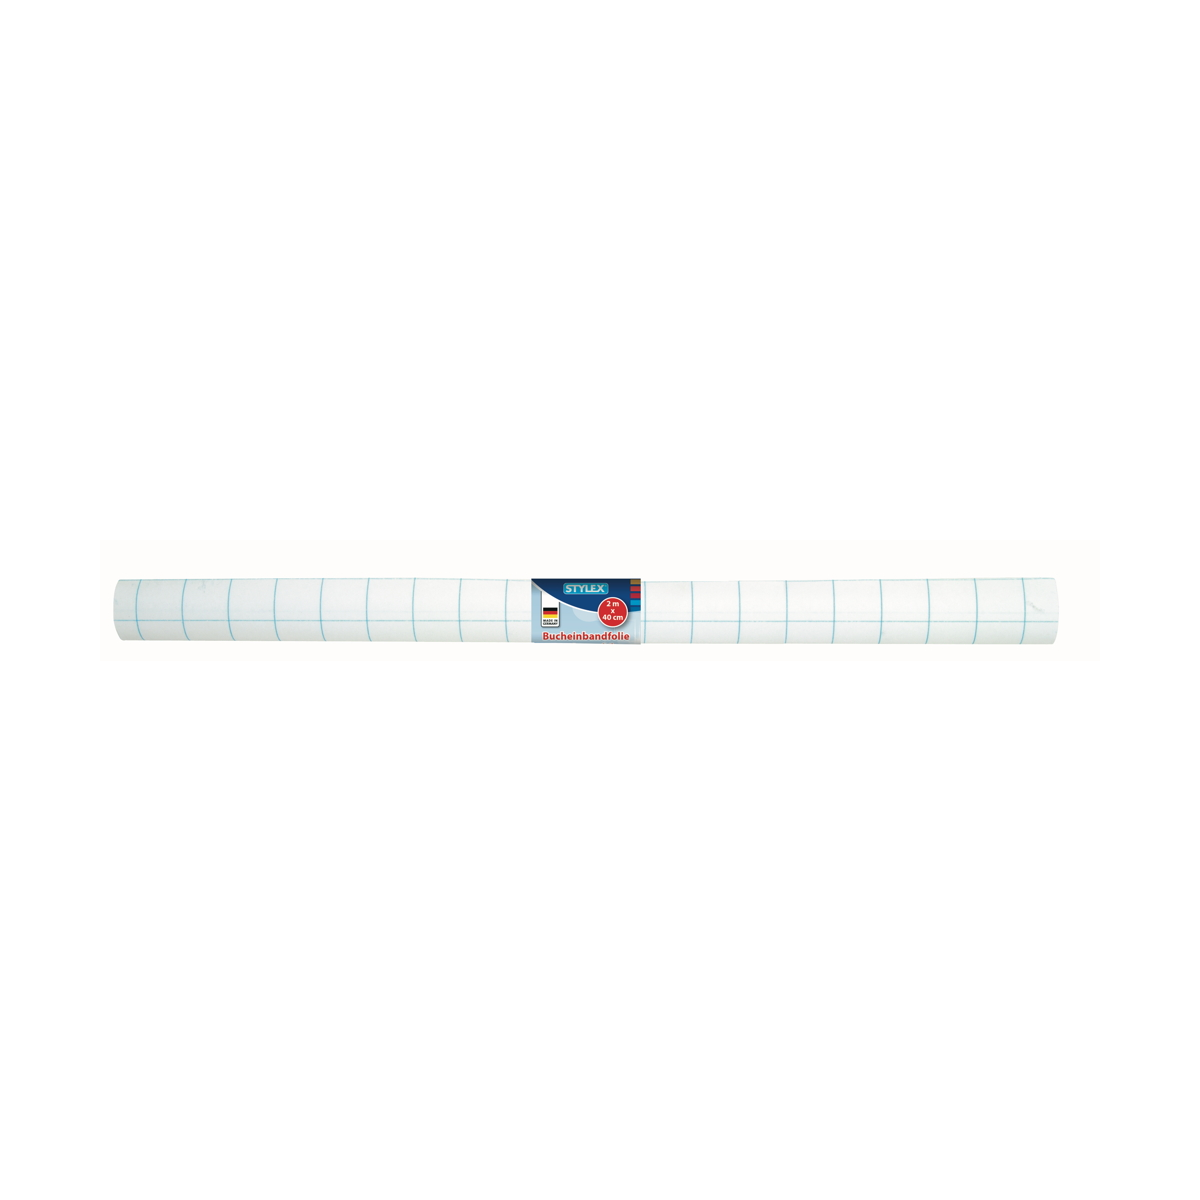 Stylex Bucheinband-Folie 2 m x 40 cm selbstklebend transparent